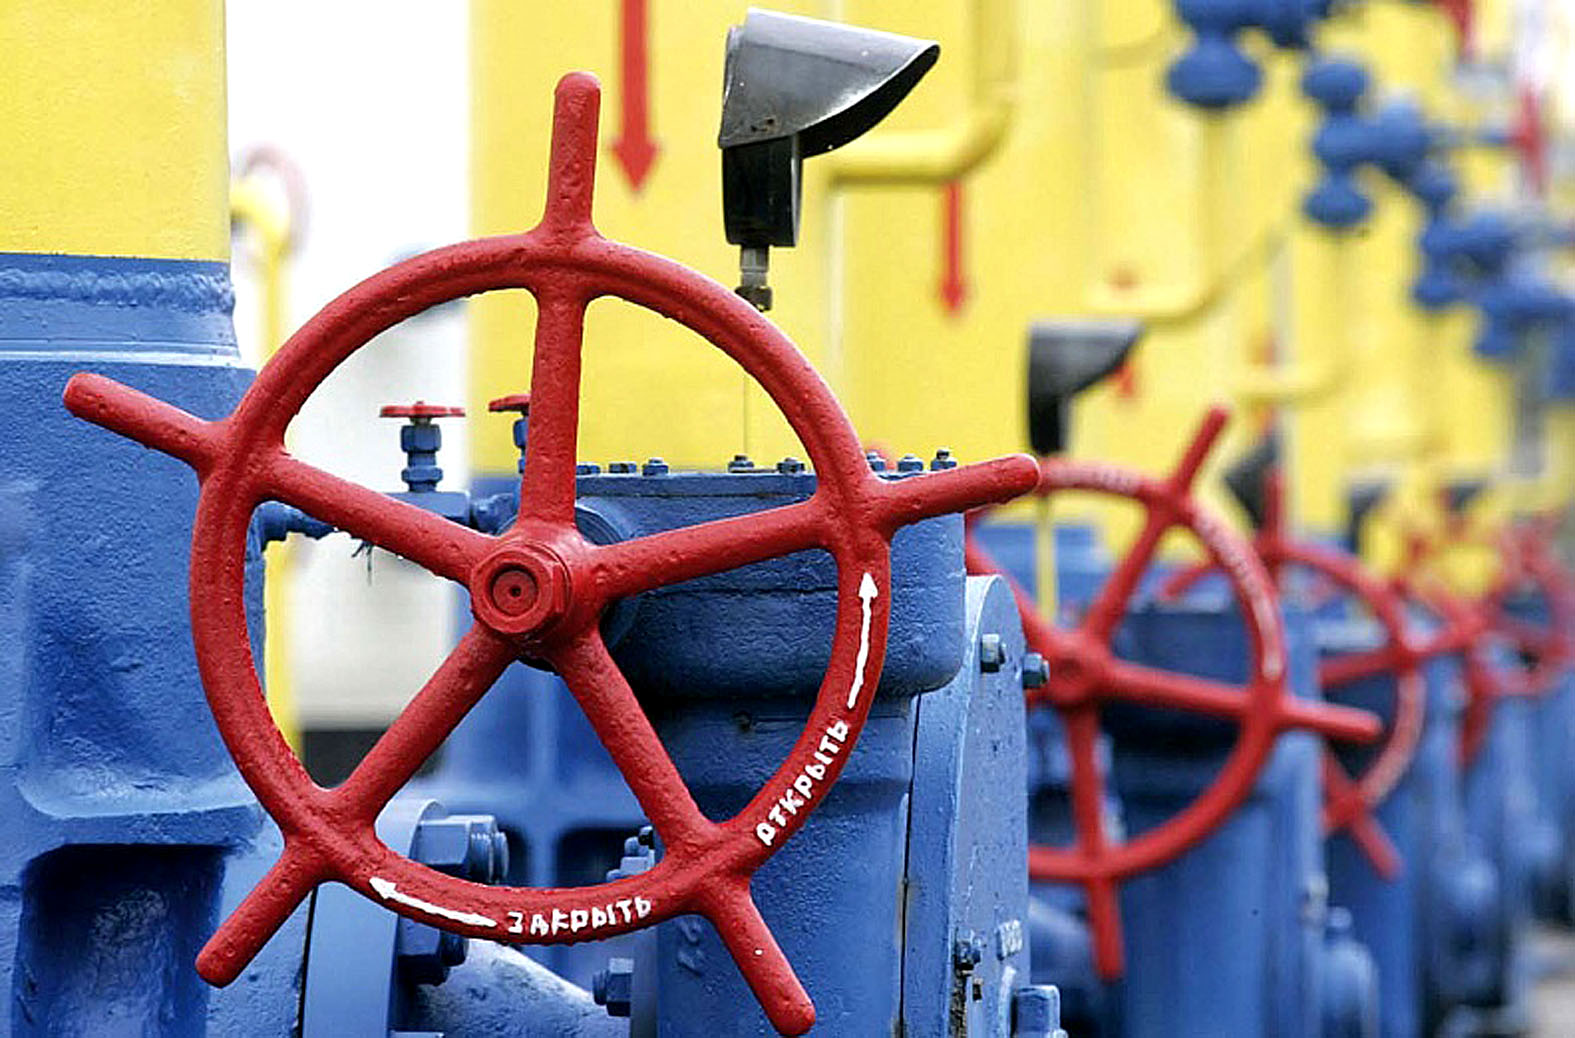 Украина резко сократила импорт газа из ЕС